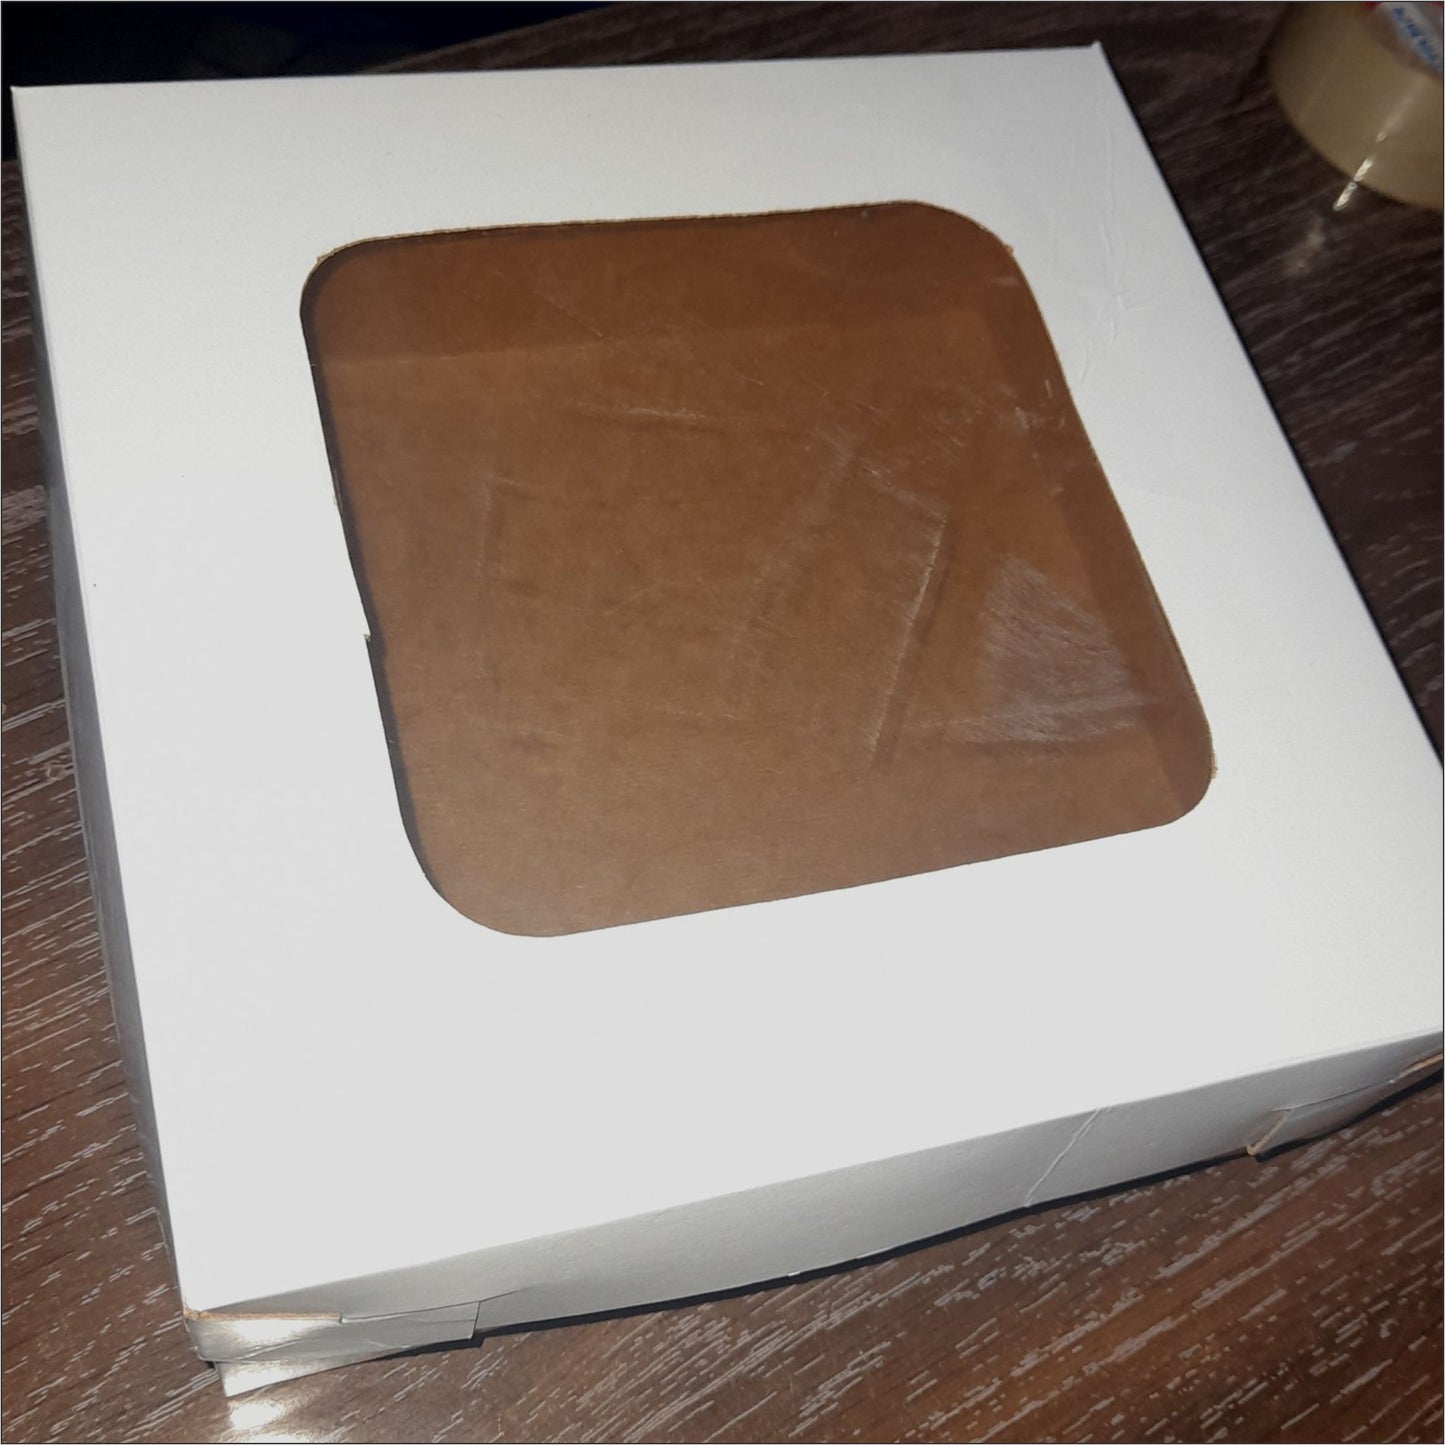 6x6x3 inch Cake Box- Brownie Box